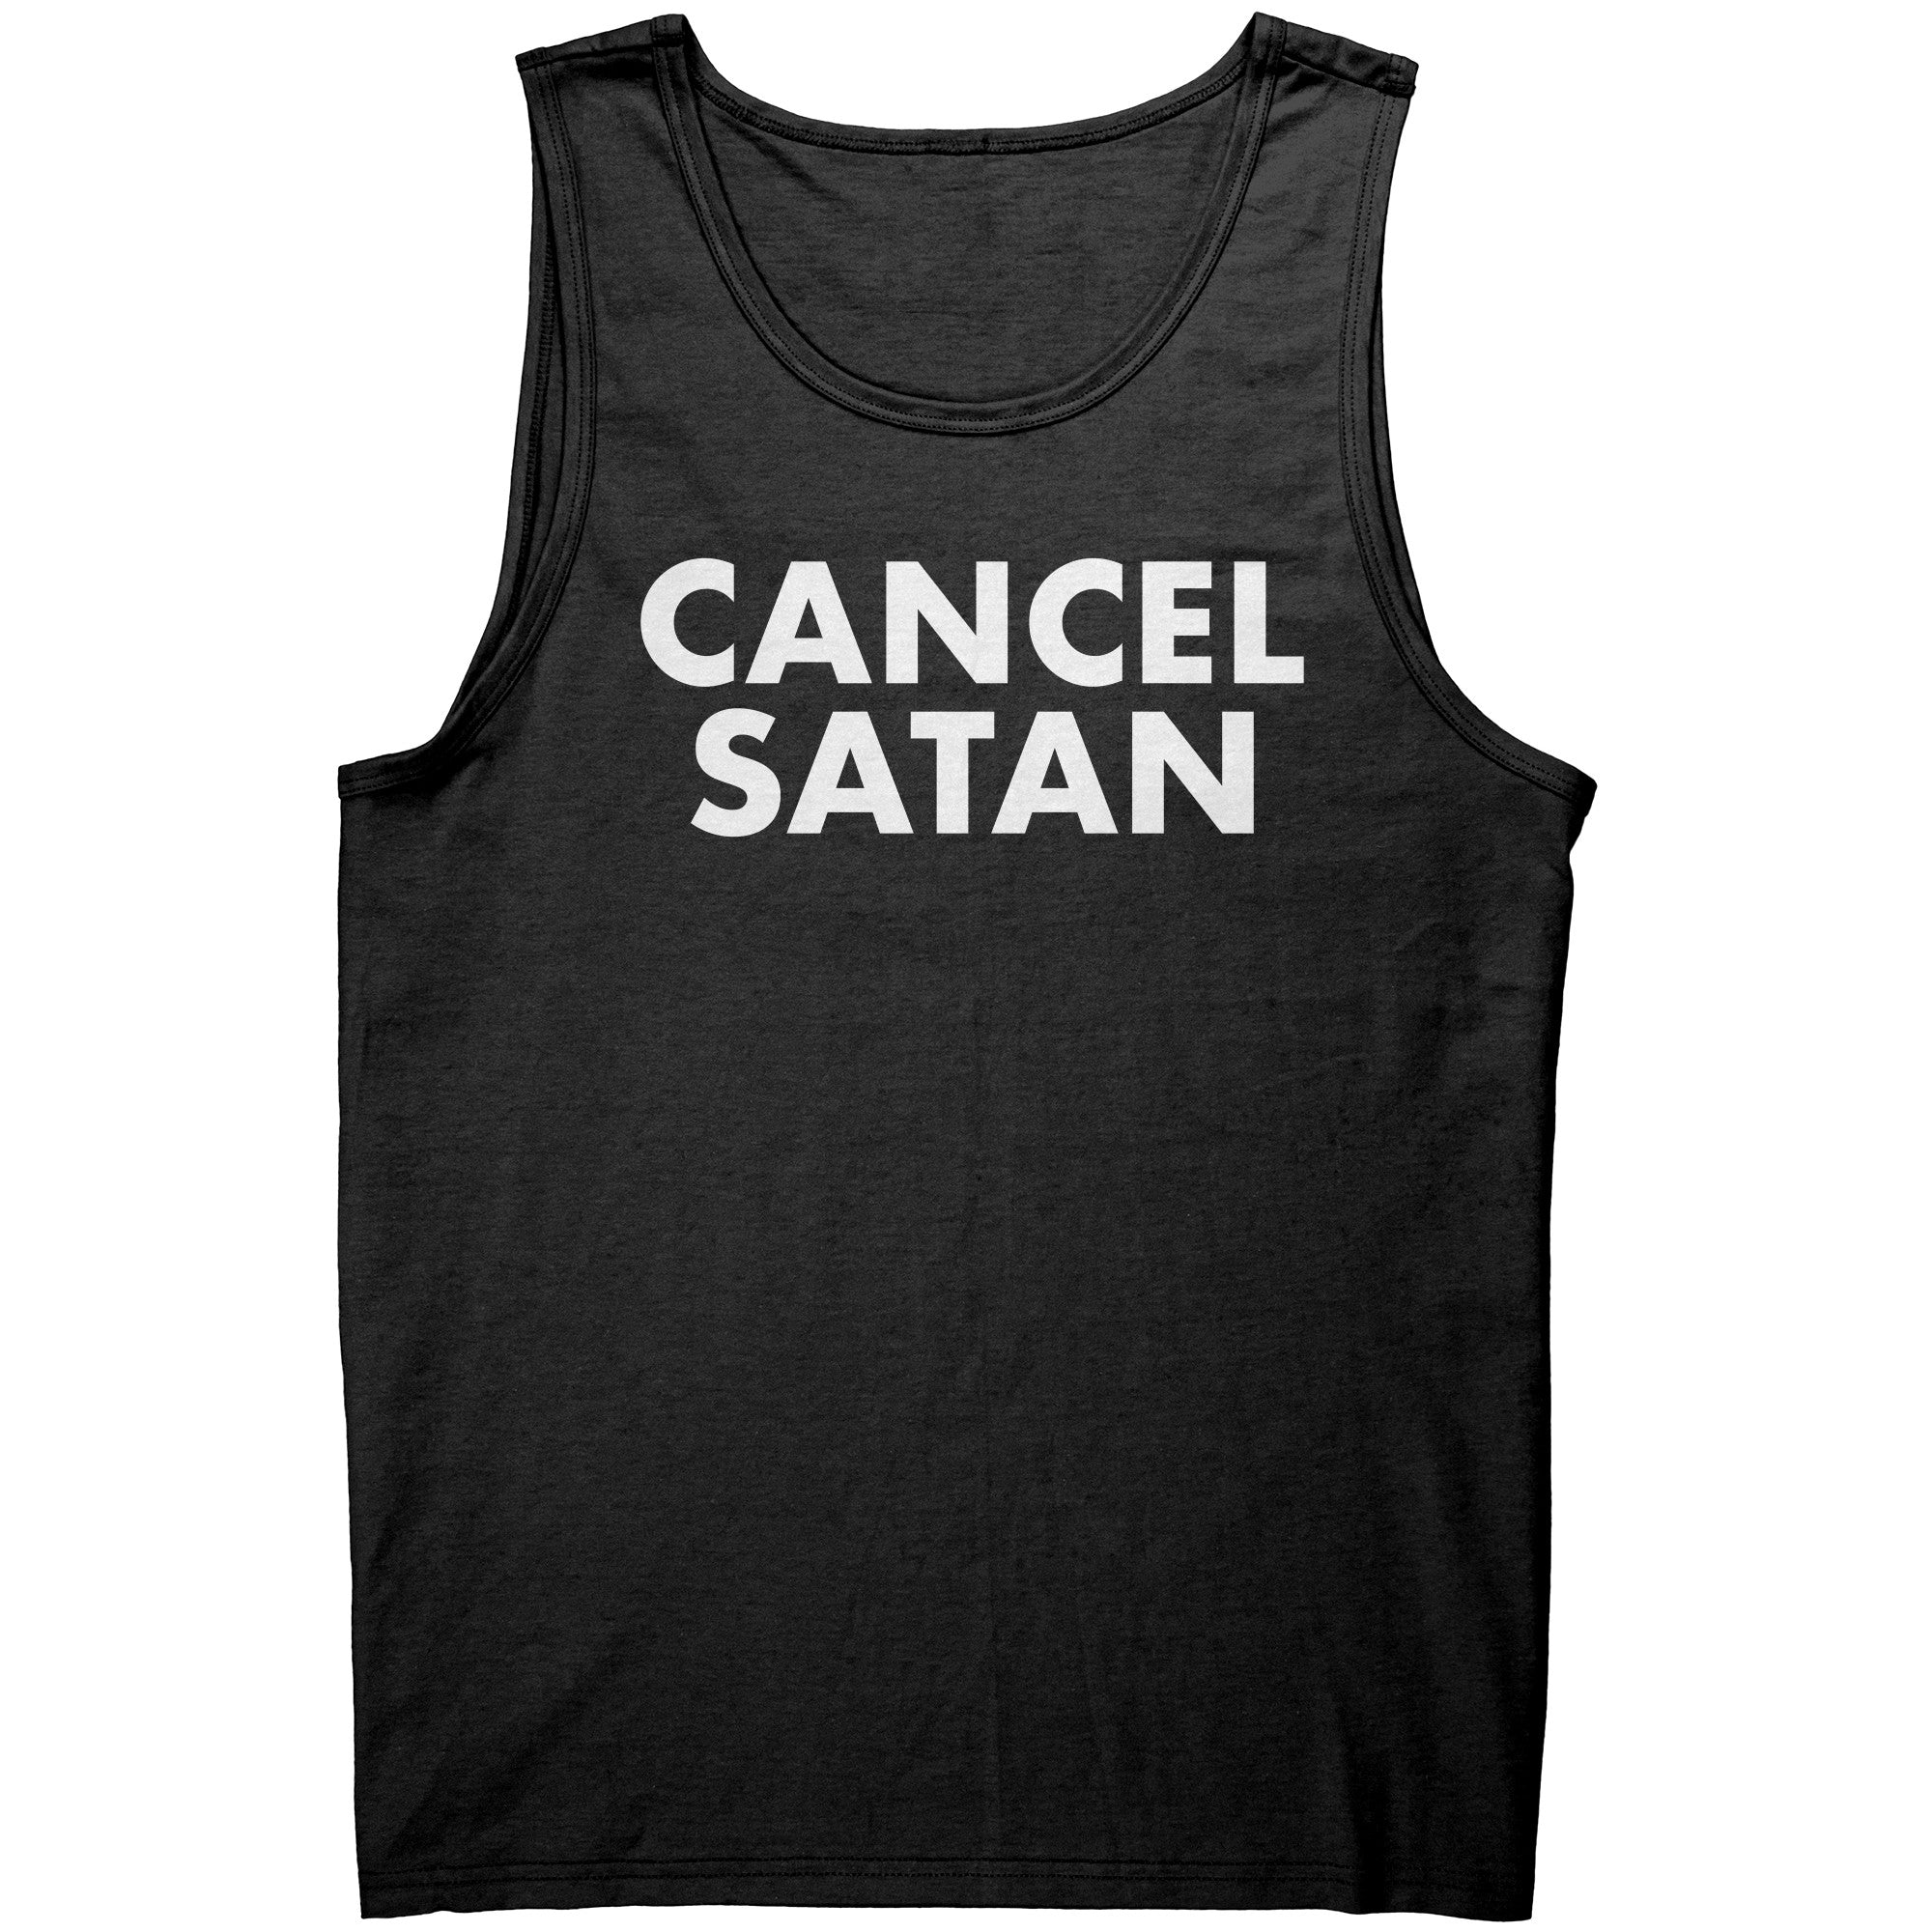 Cancel Satan -Apparel | Drunk America 